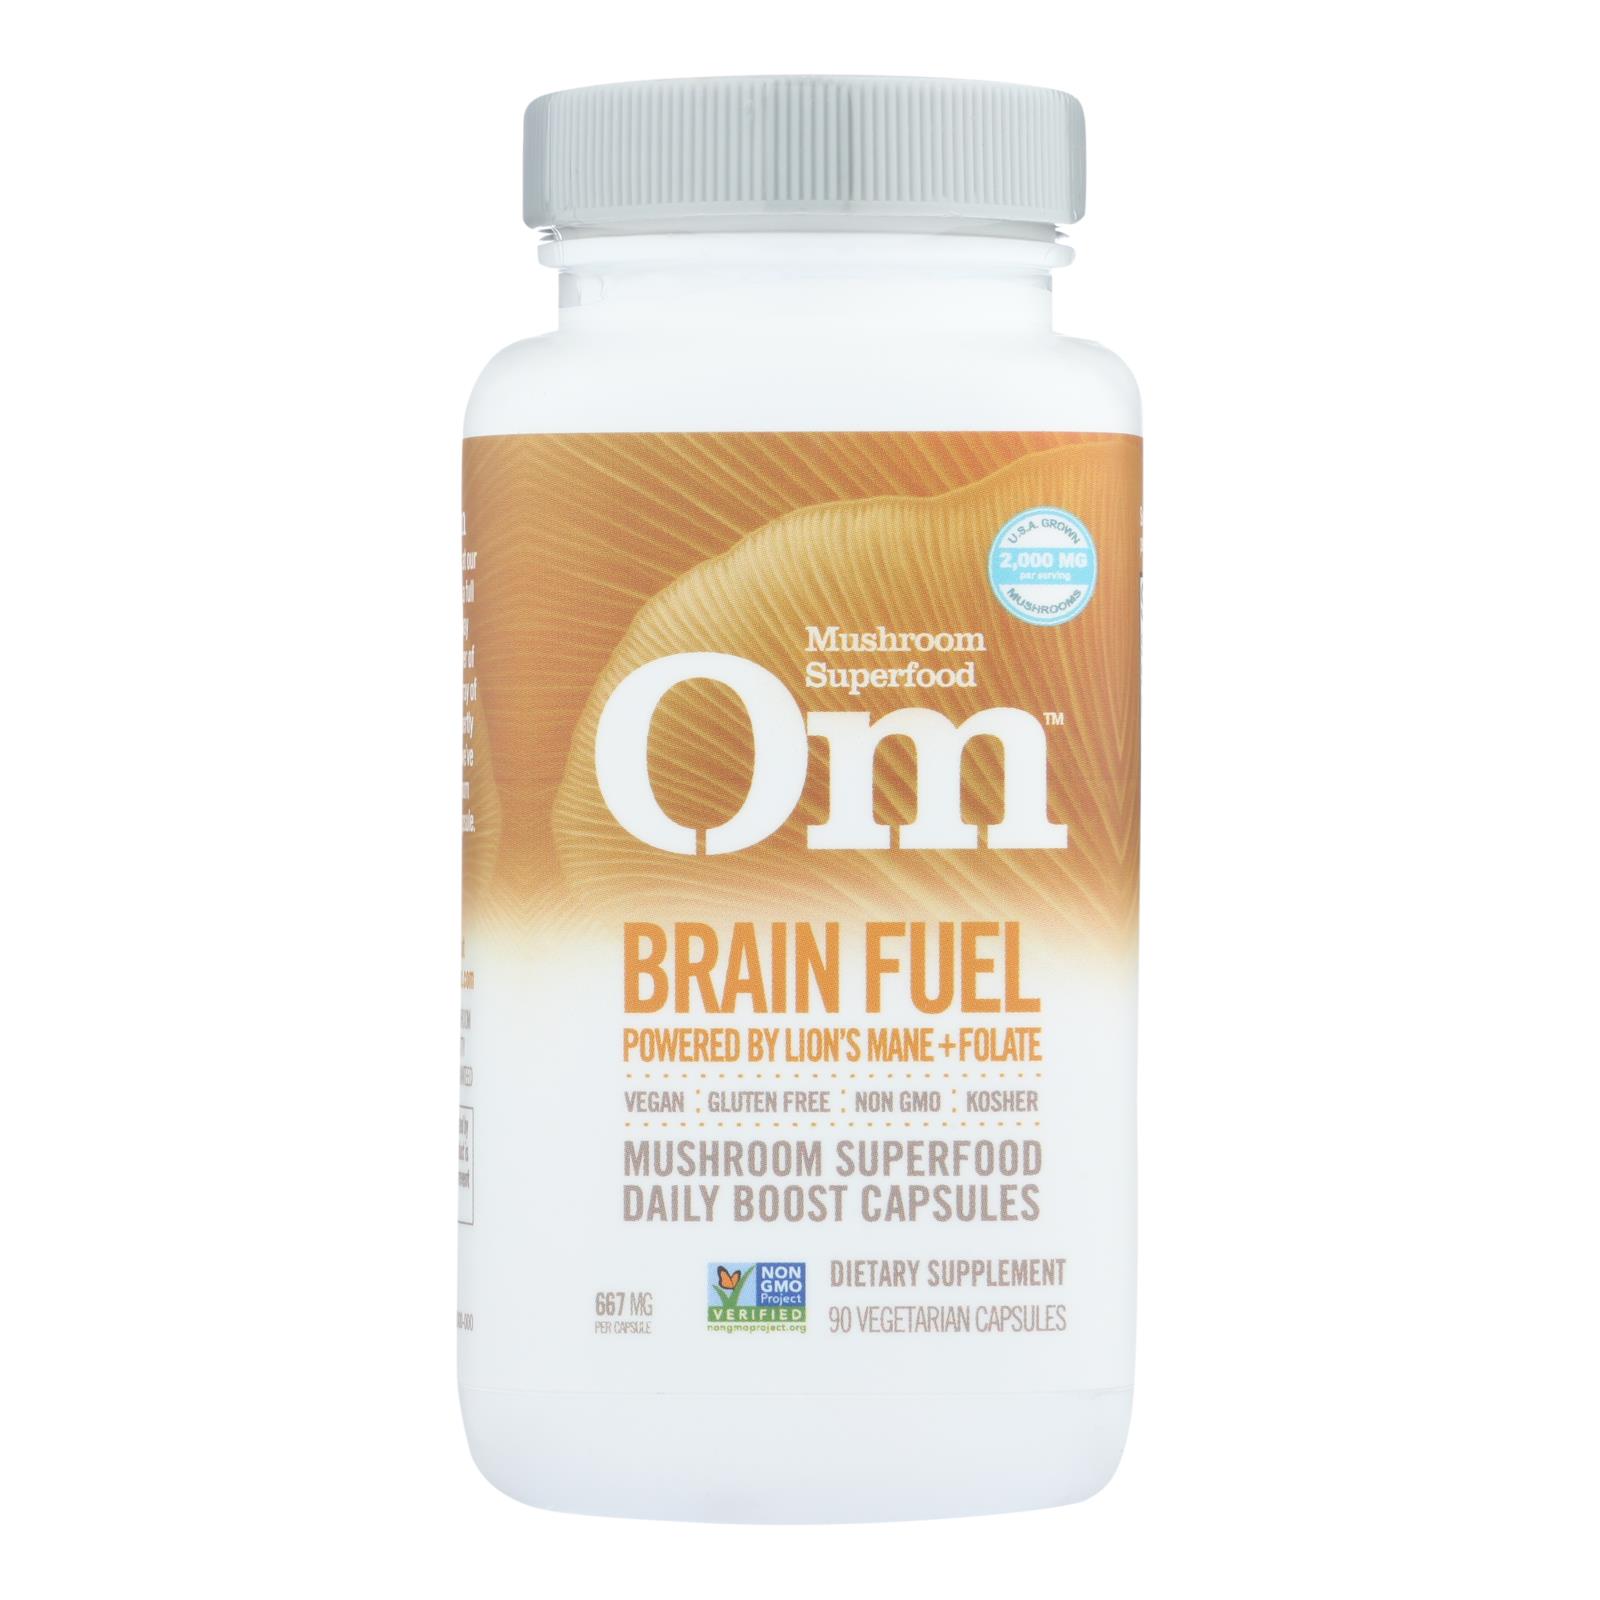 Om - Mush Sprfd Brain Fuel - 1 Each - 90 CT